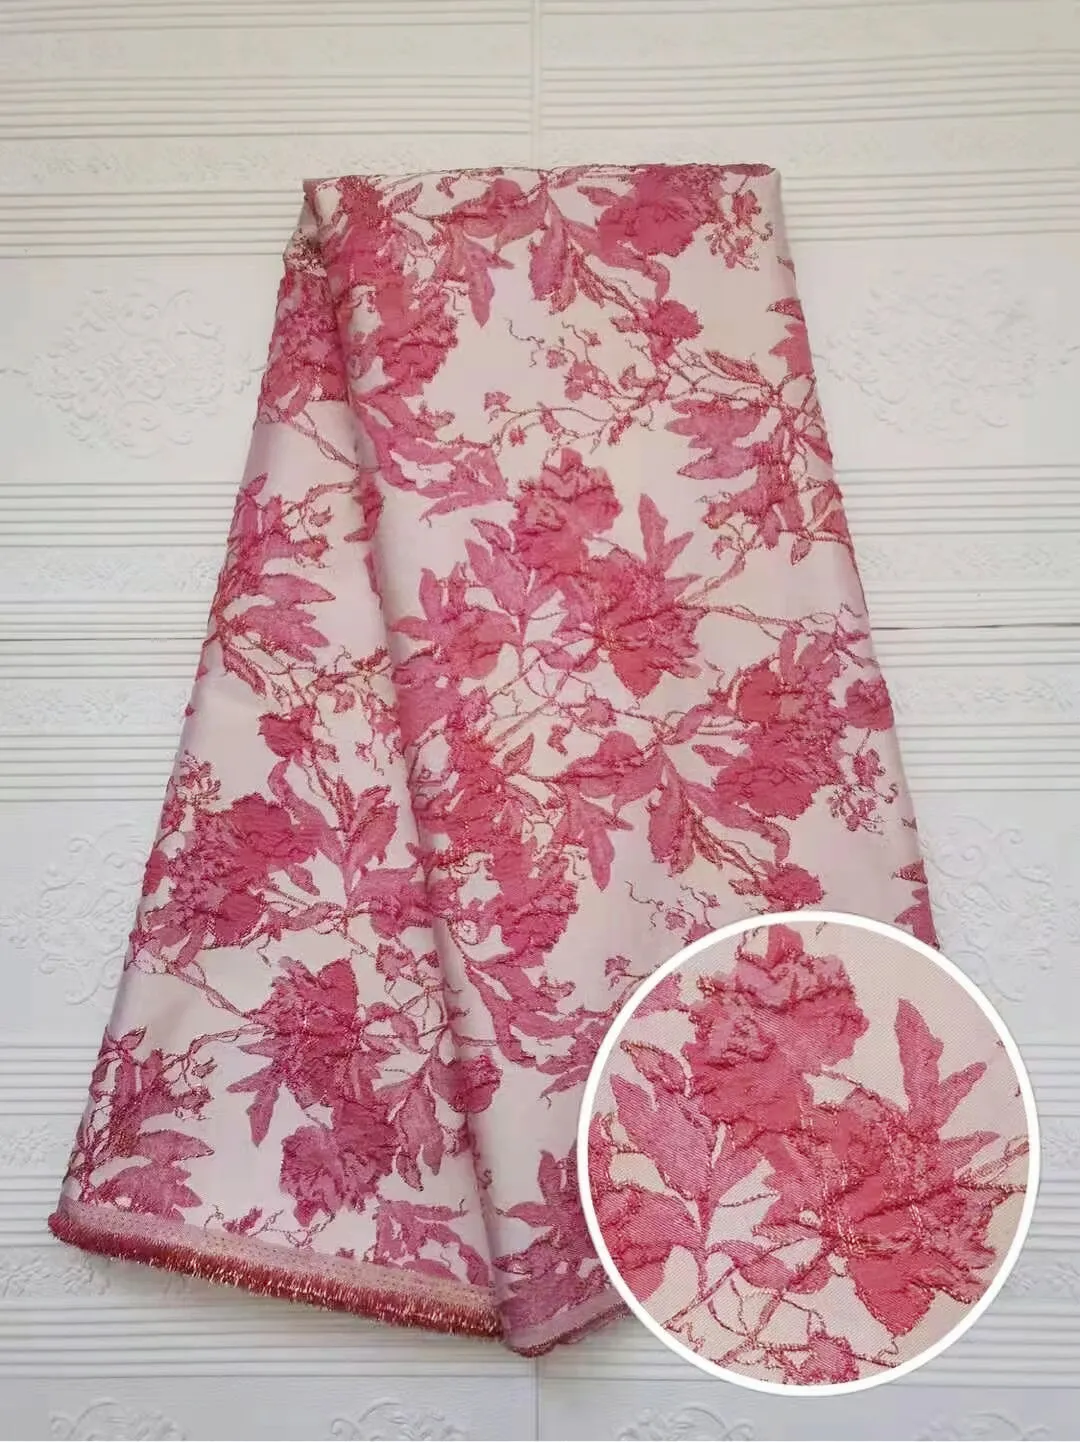 5Yller / parti mode vit velveteen spets tyg afrikansk mjuk sammet material röd blomma stil för dressing jl10